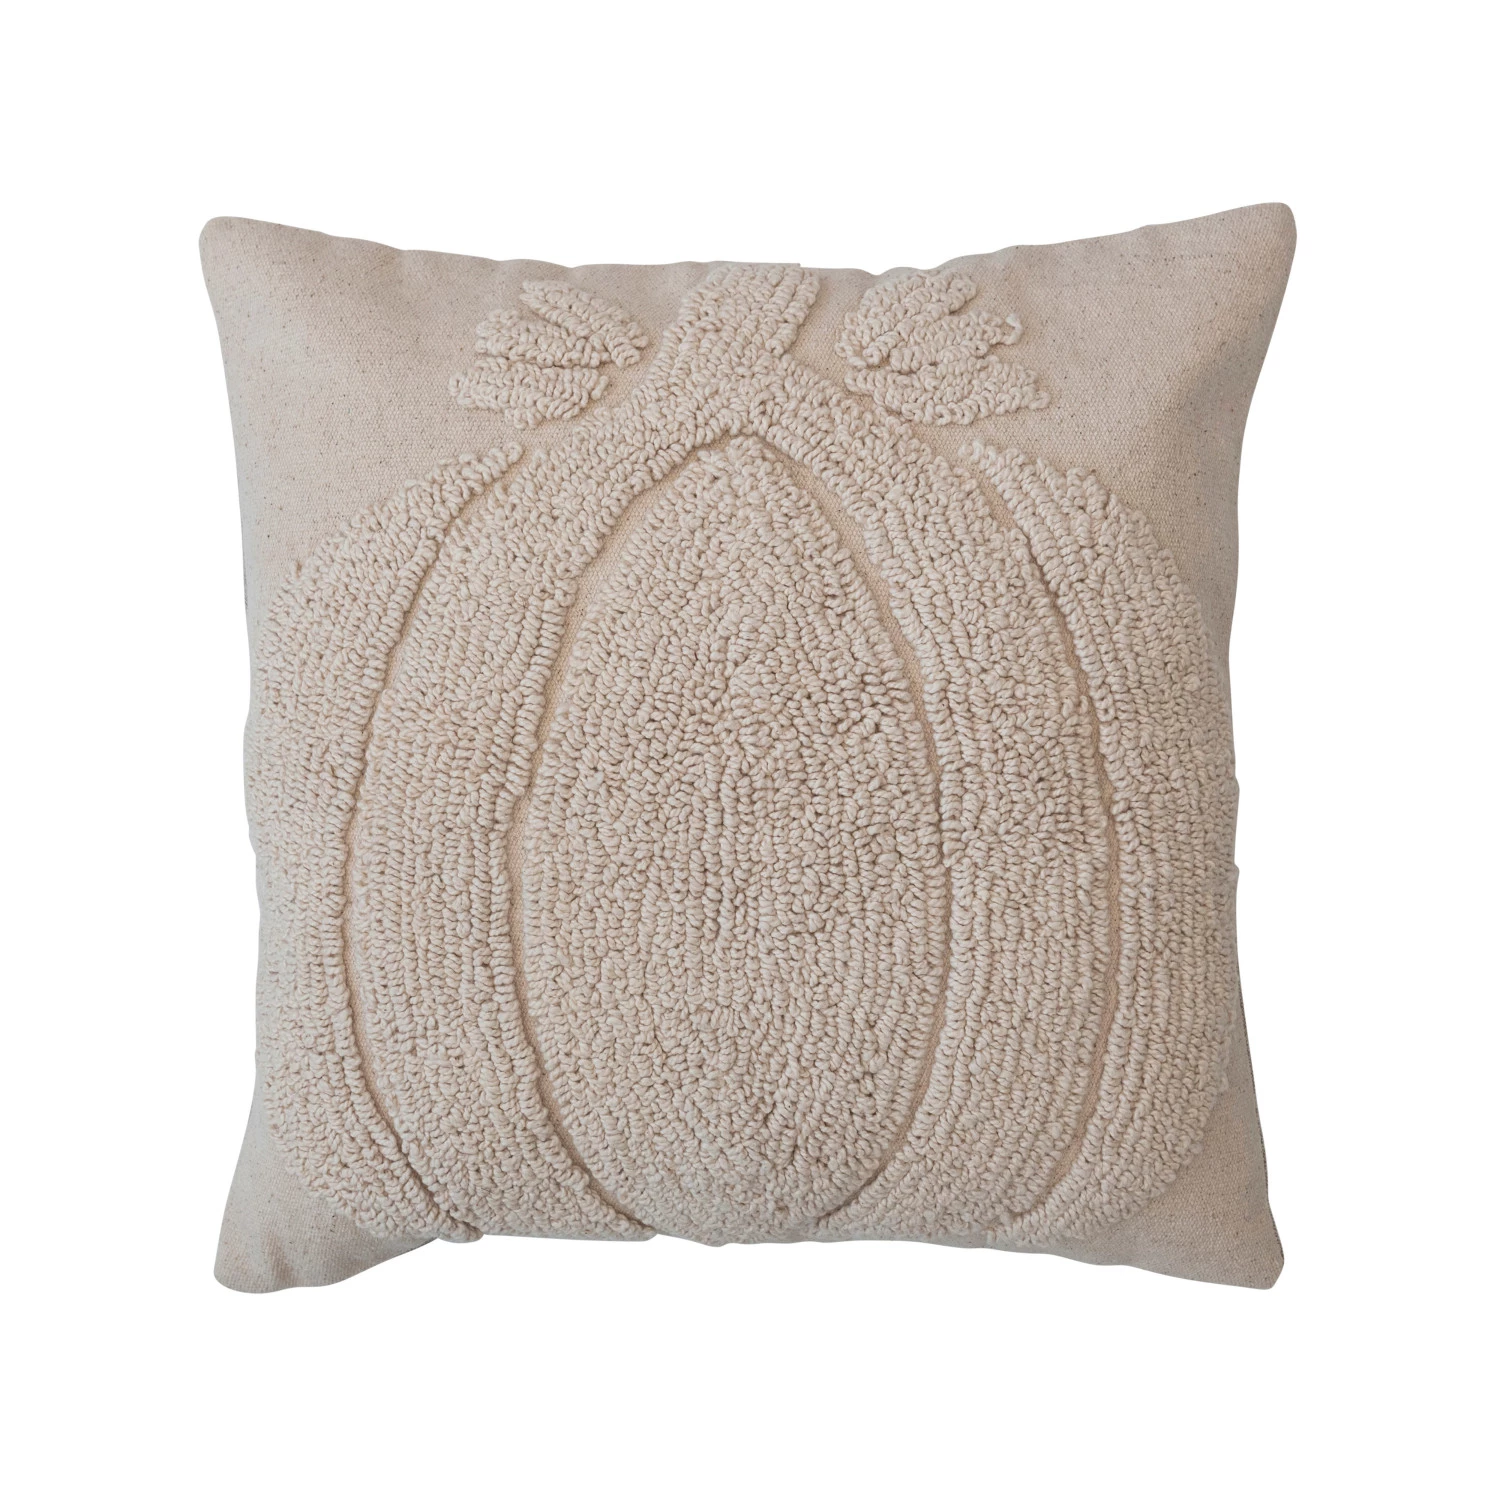 Image of Tufted Pumpkin Pillow, 18"